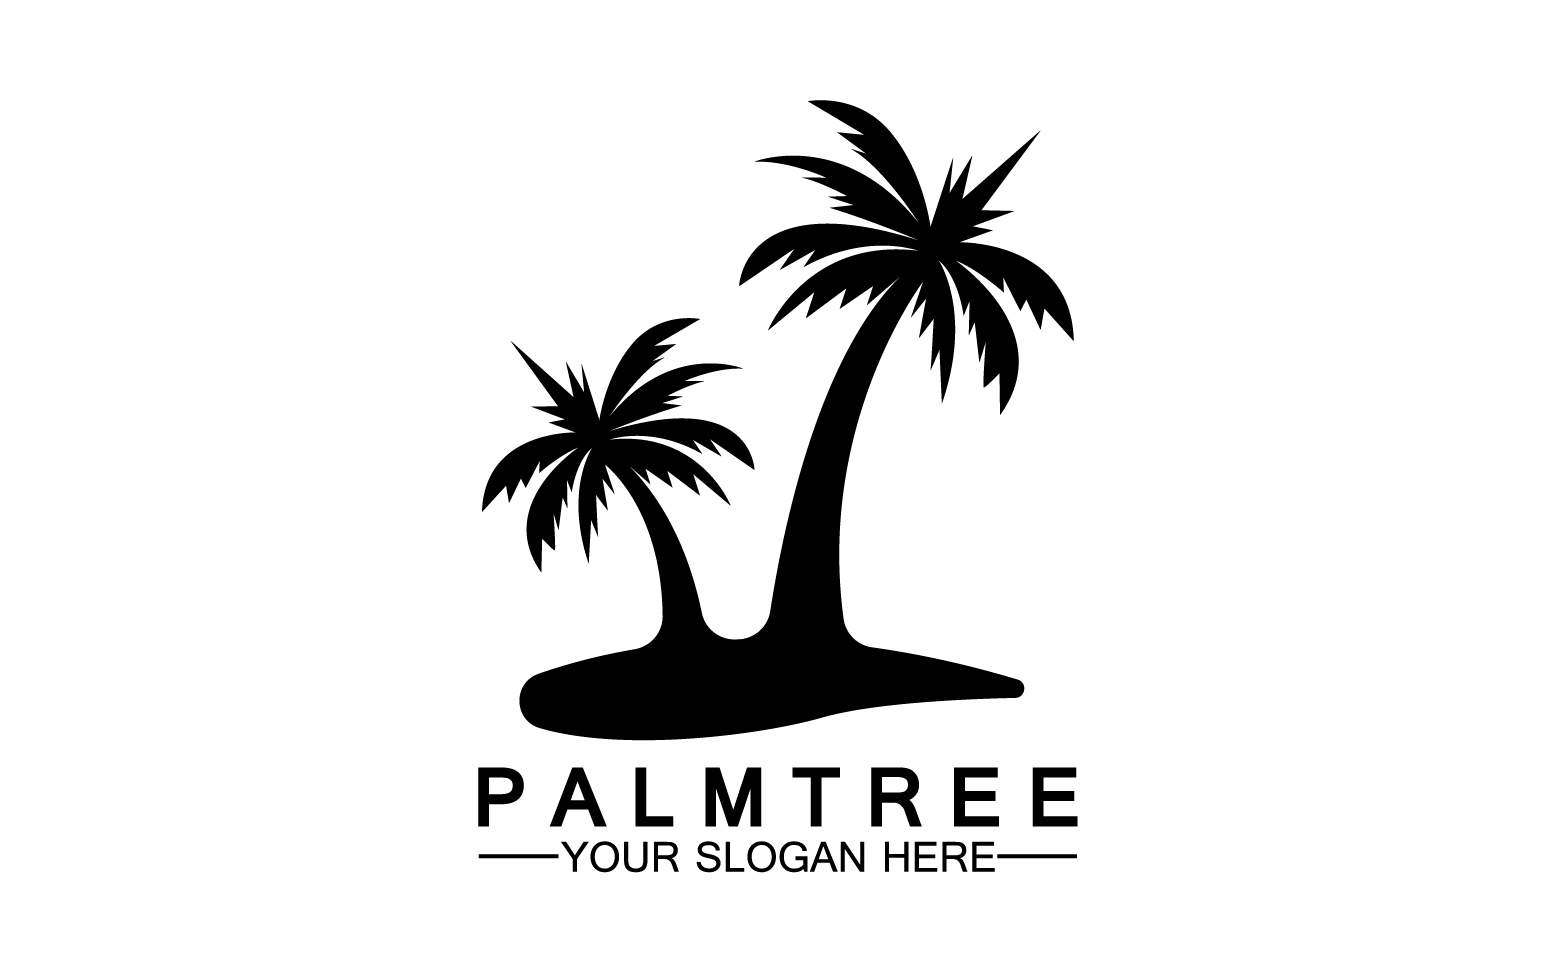 Palm tree hipster vintage logo vector icon illustration v4